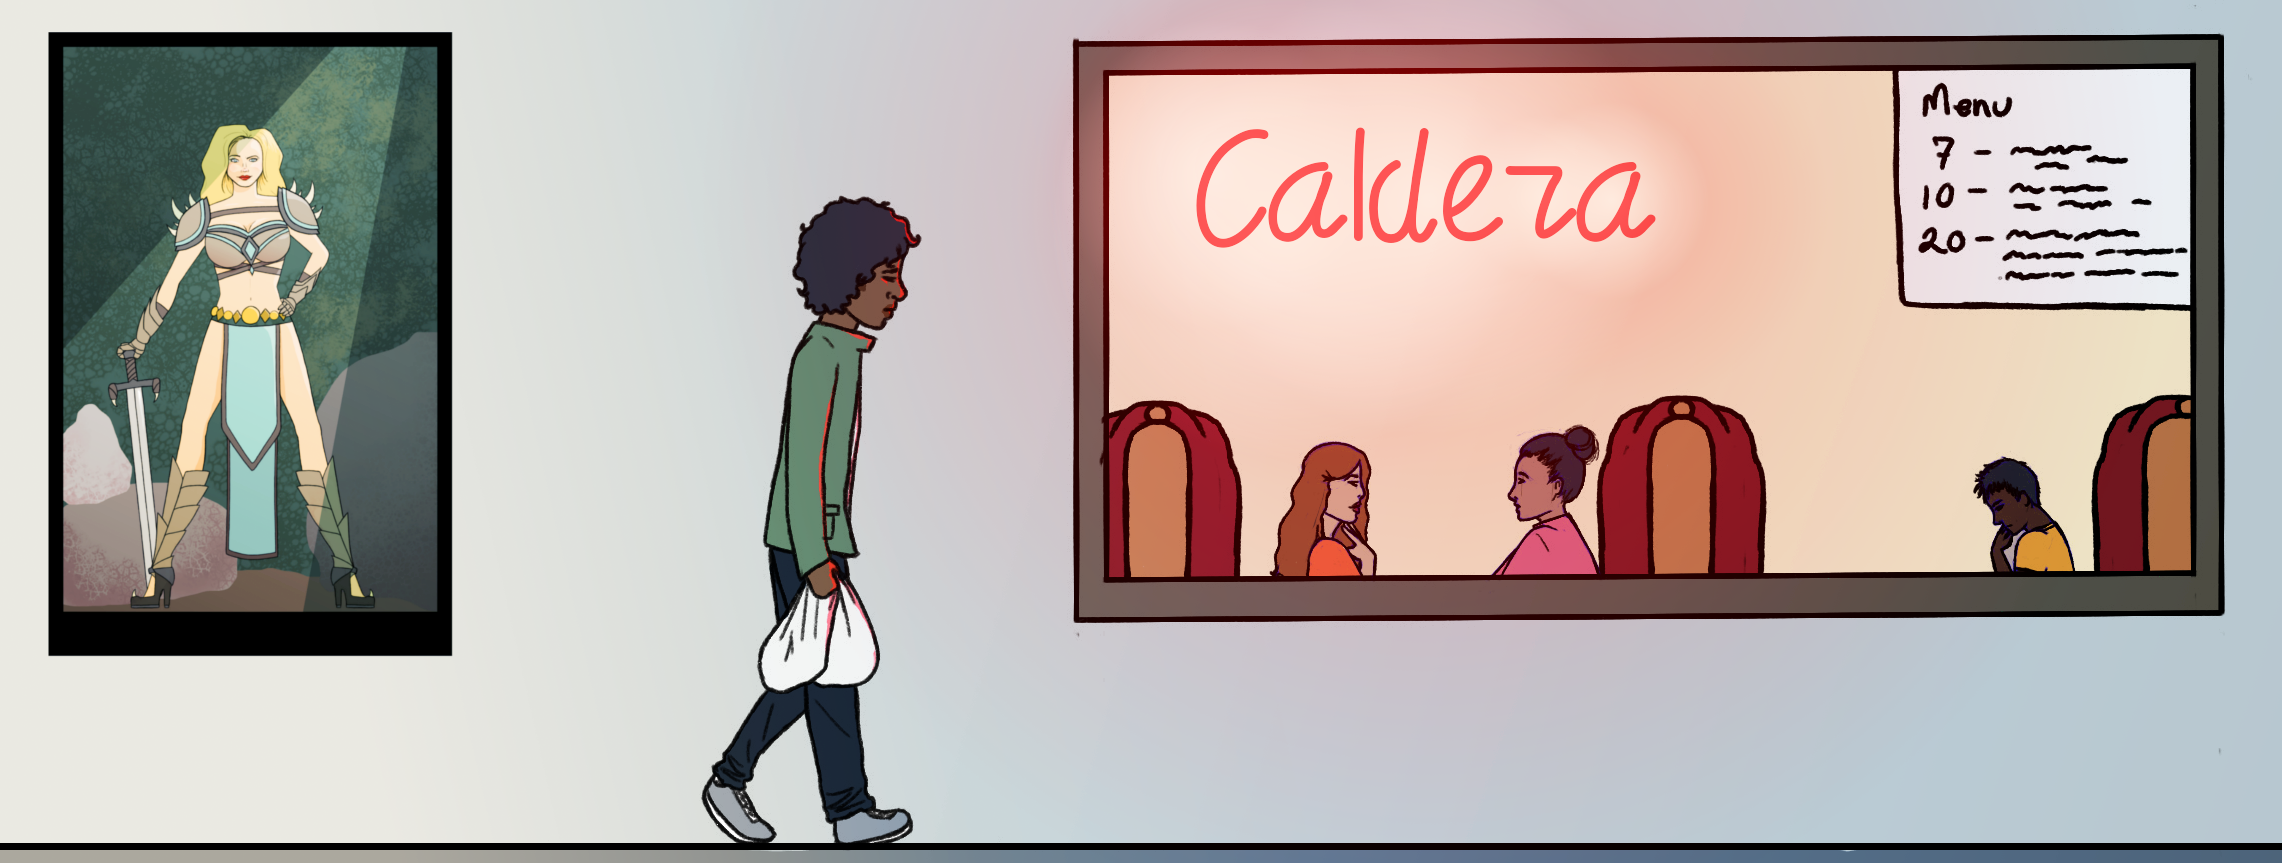 Caldera header